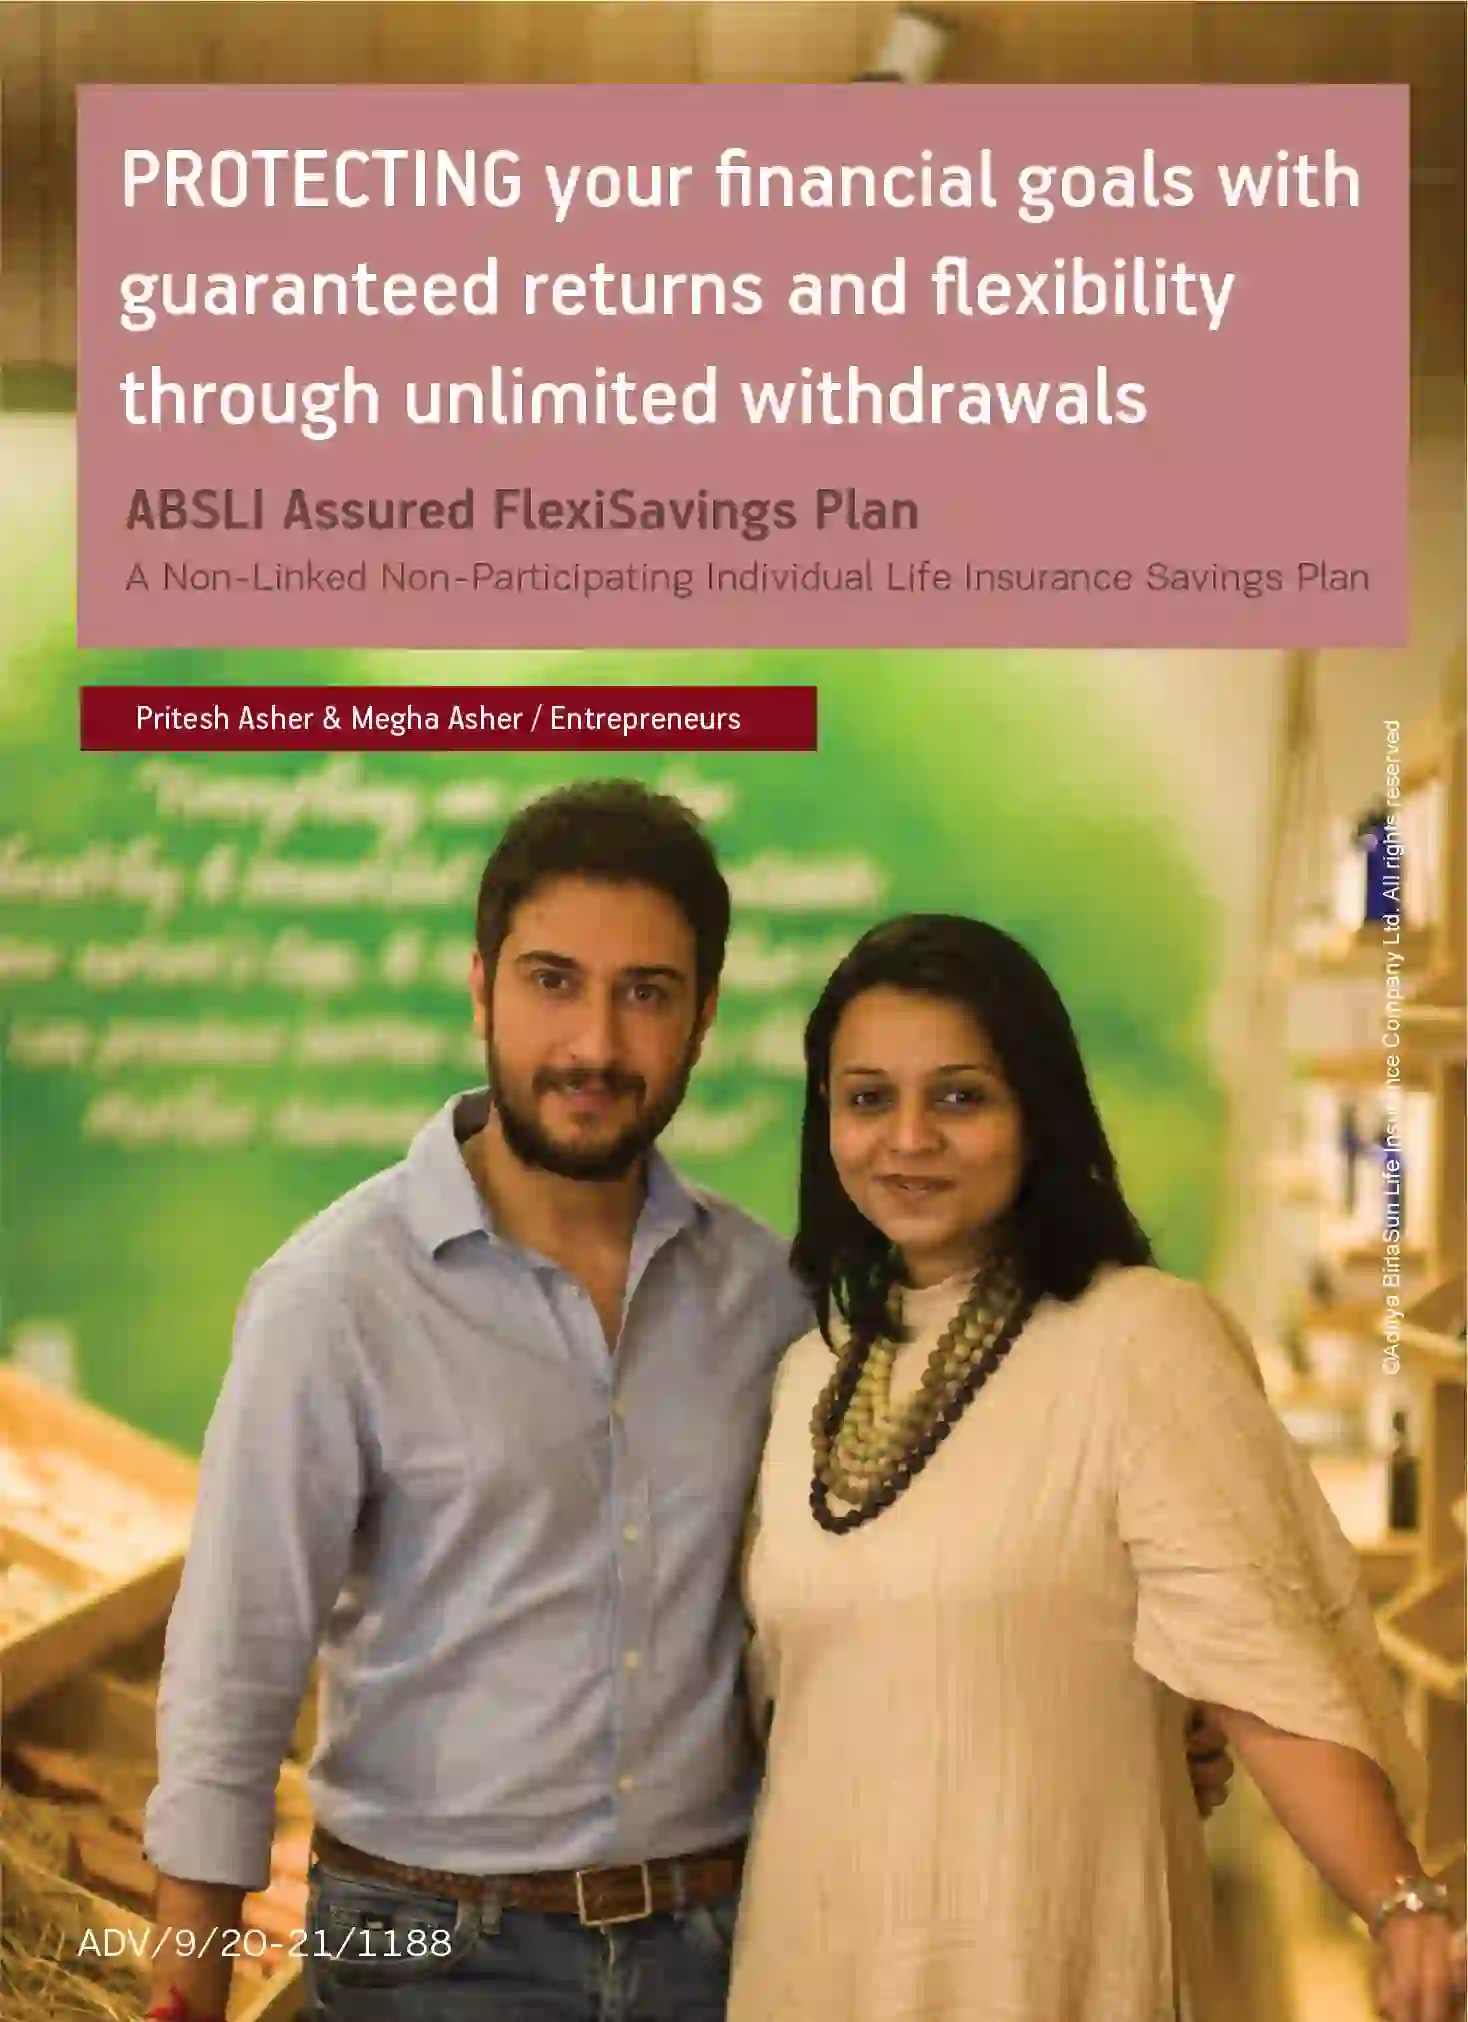 ABSLI Assured FlexiSavings Plan (Savings Plan)